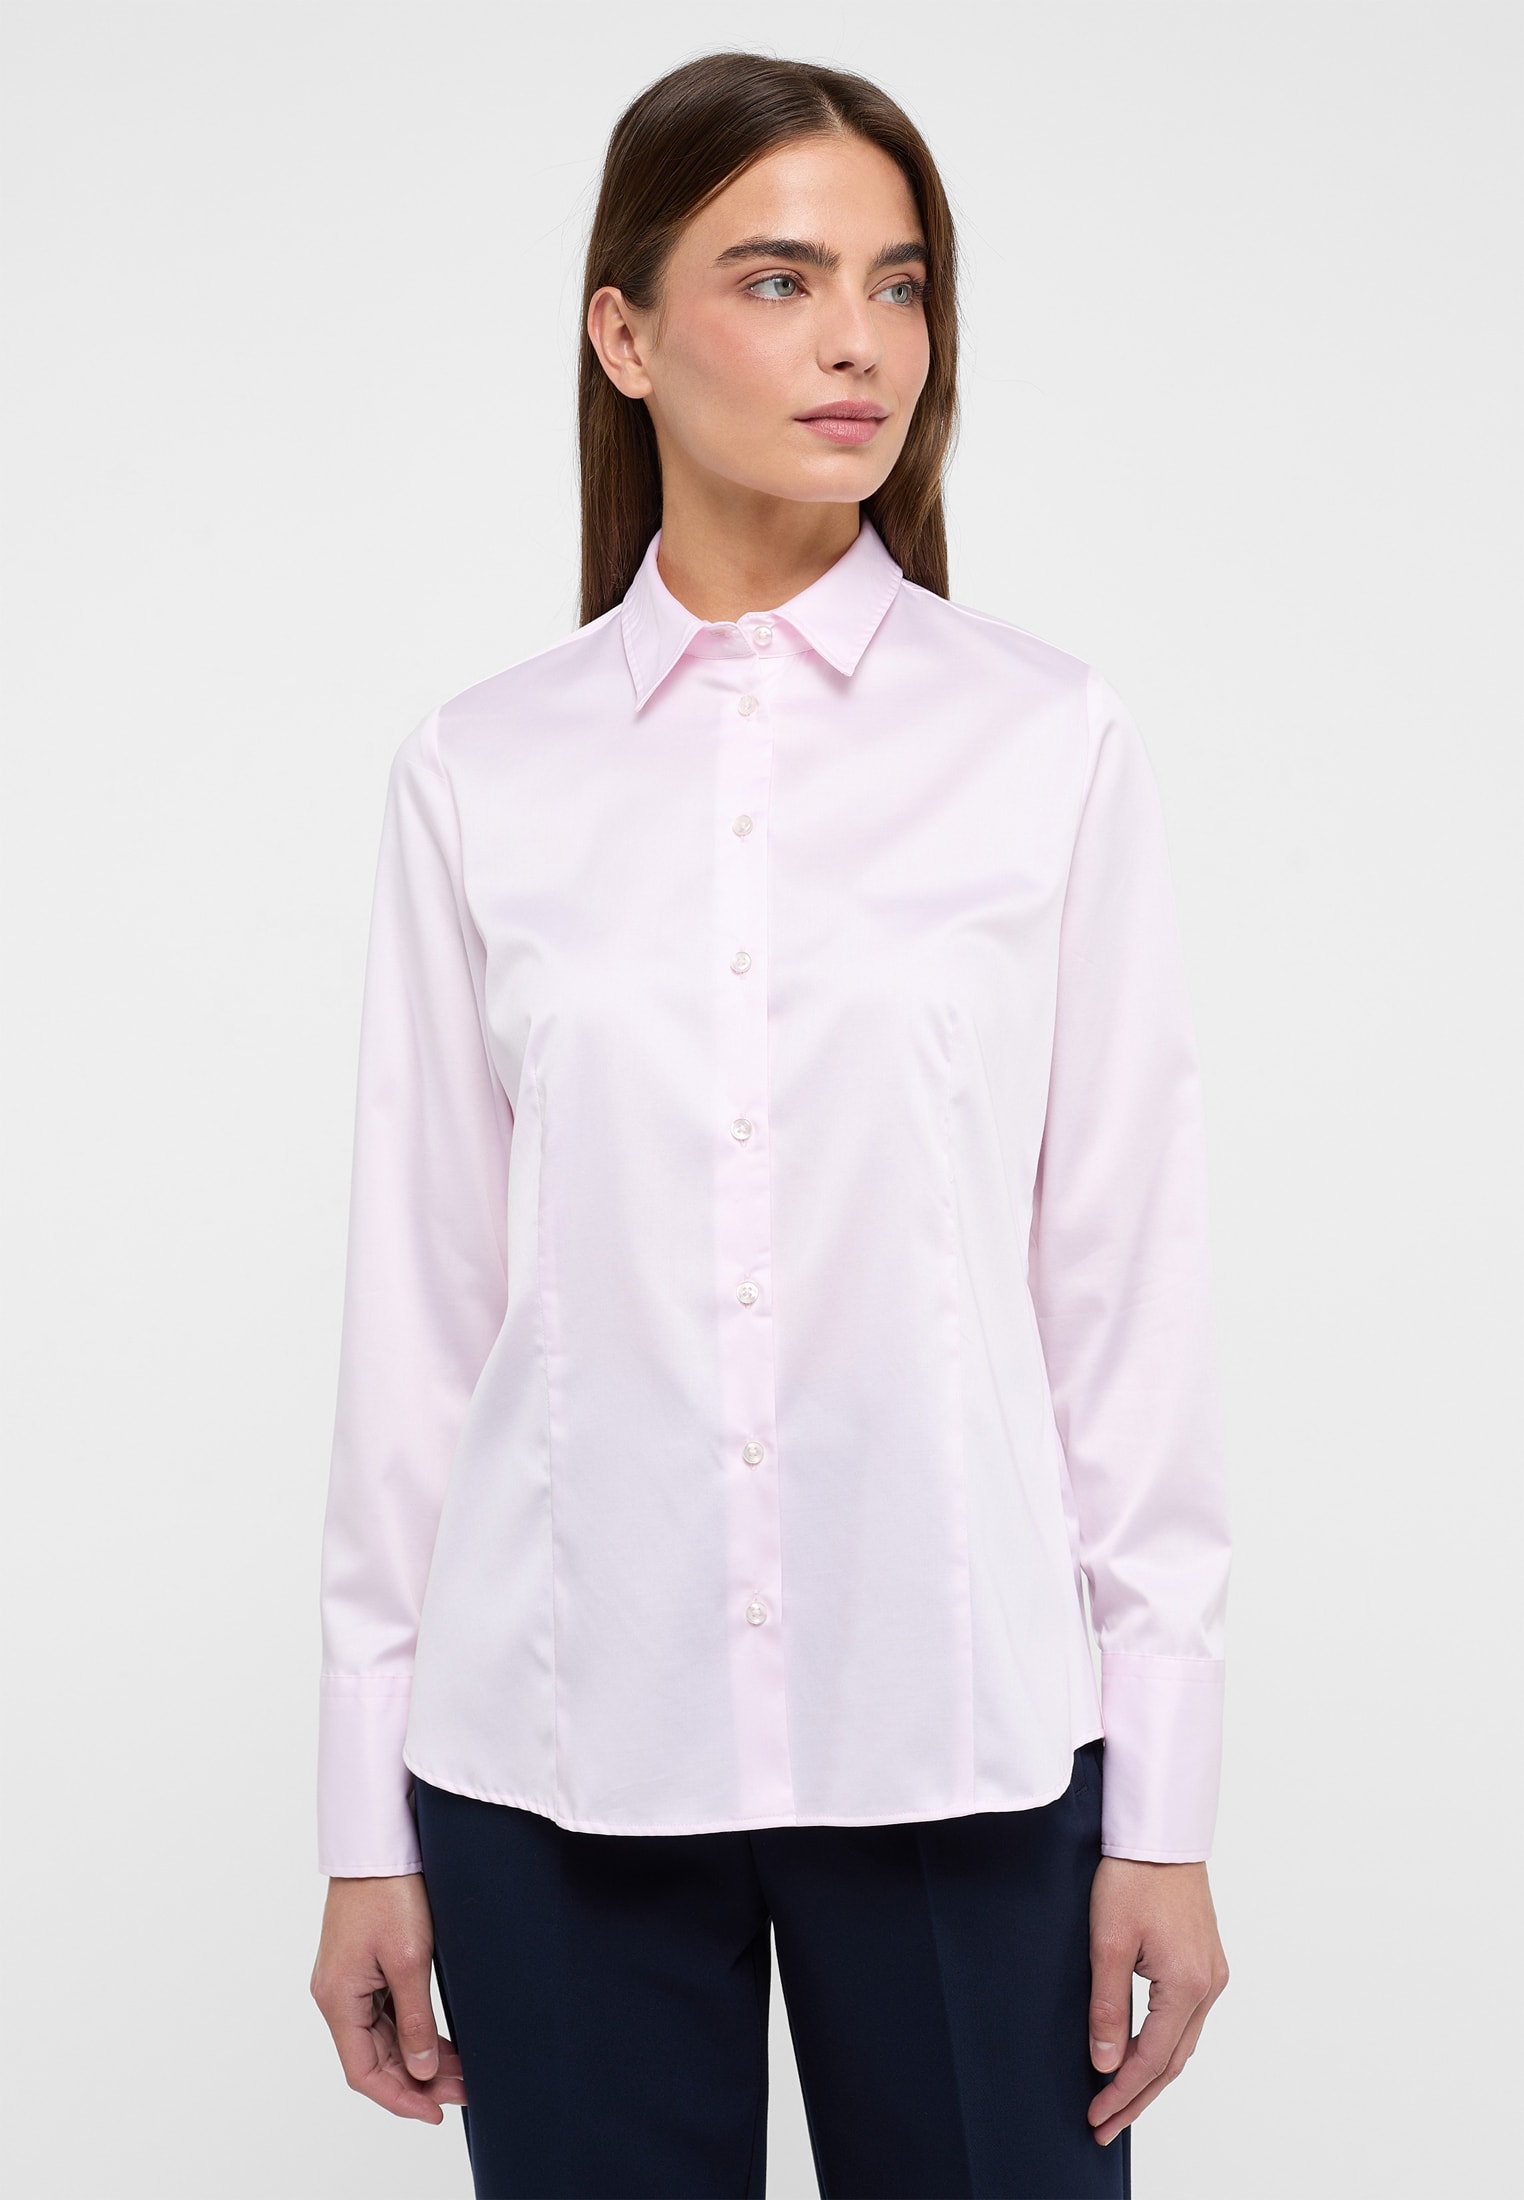 rosa Shirt | Satin Langarm | | 2BL00399-15-11-44-1/1 unifarben Bluse rosa | in 44